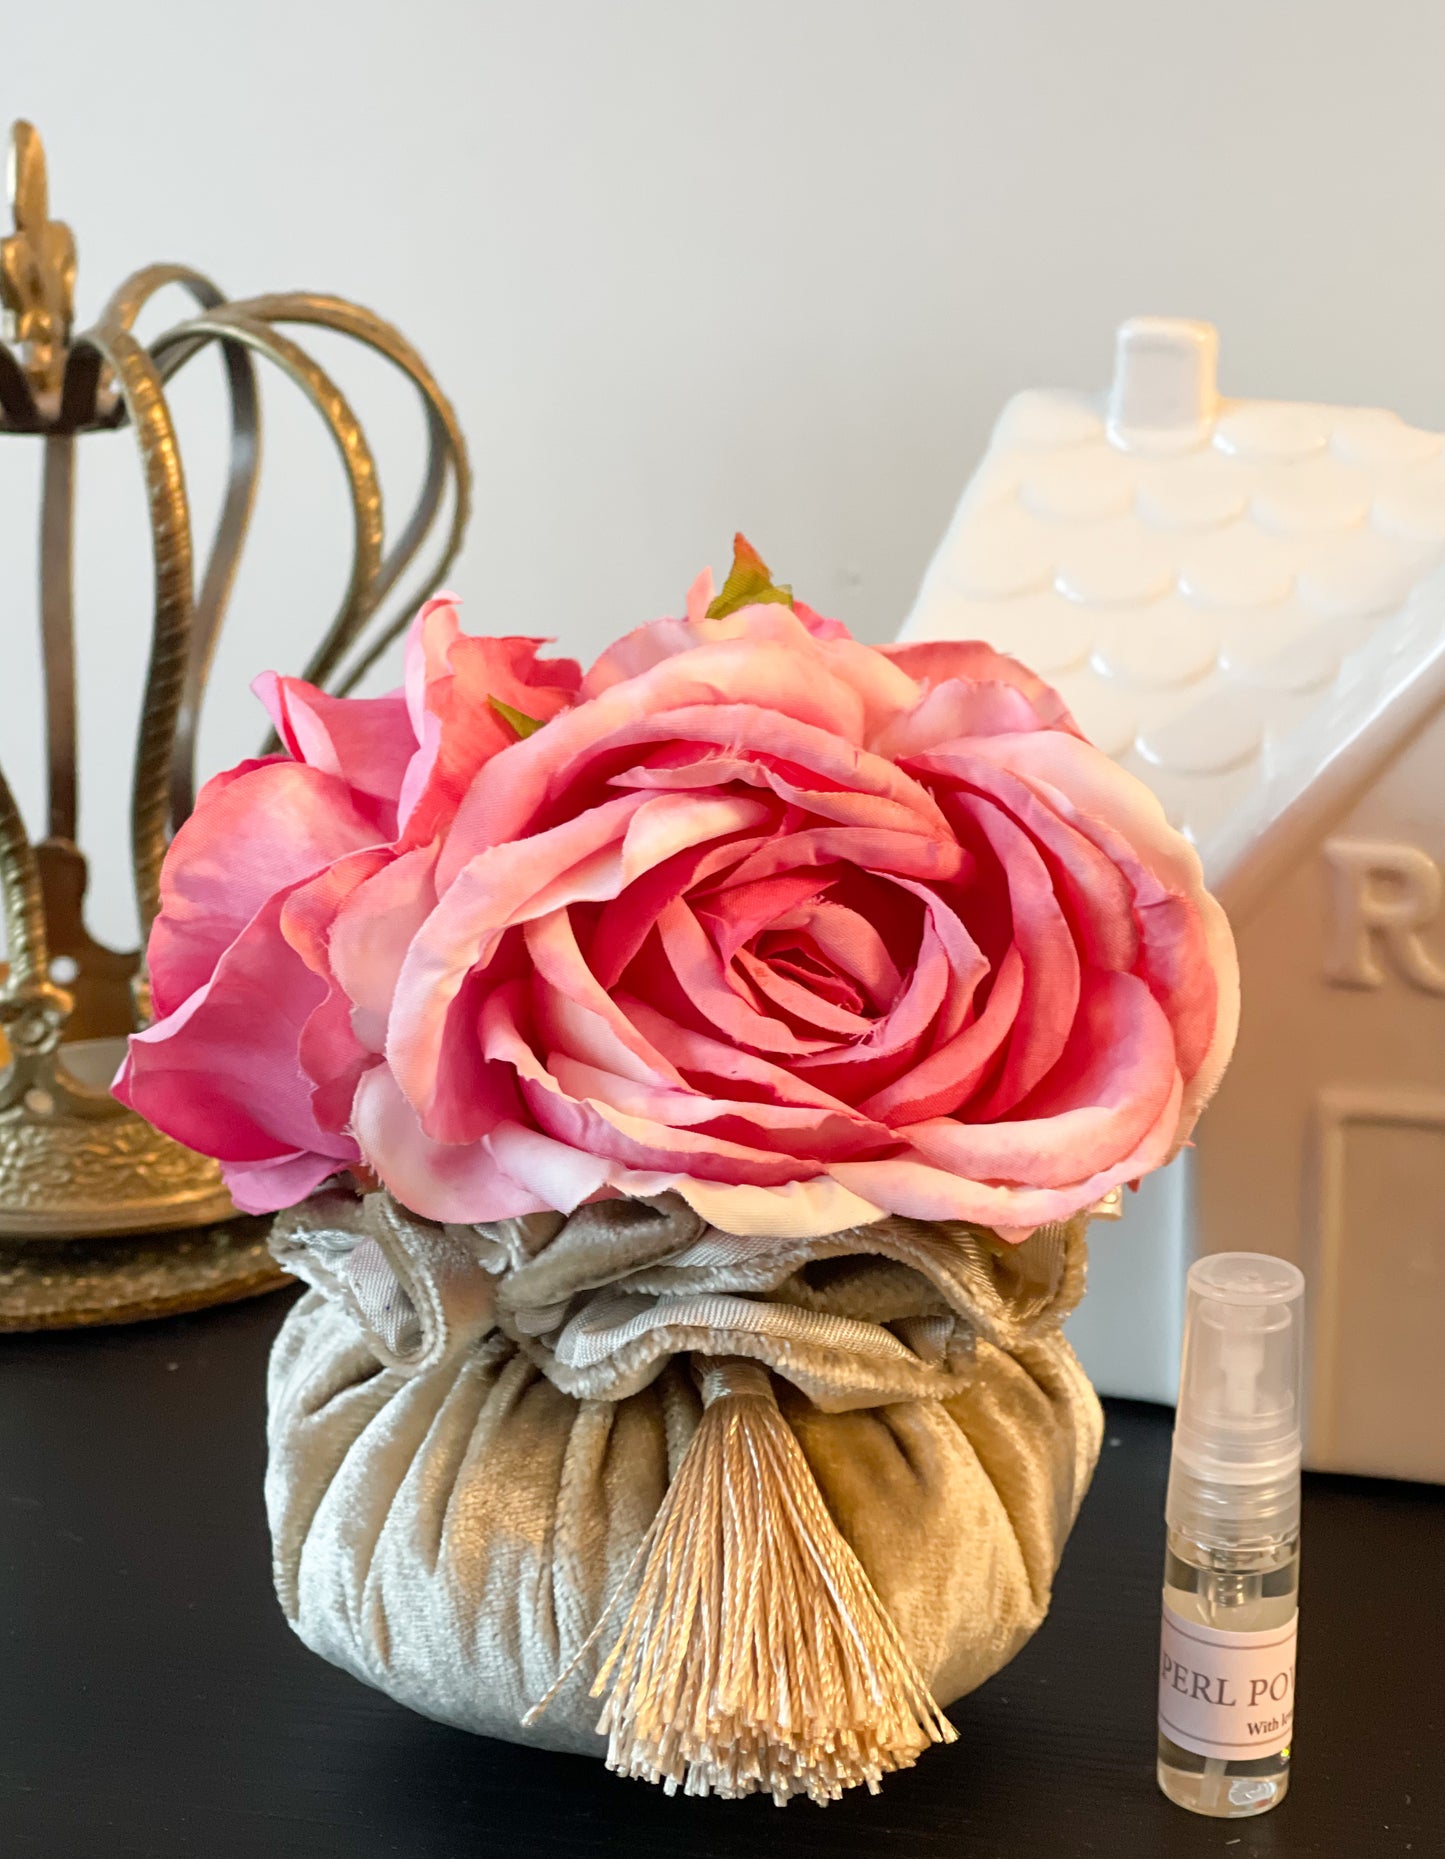 Home fragrance "Court Roses"